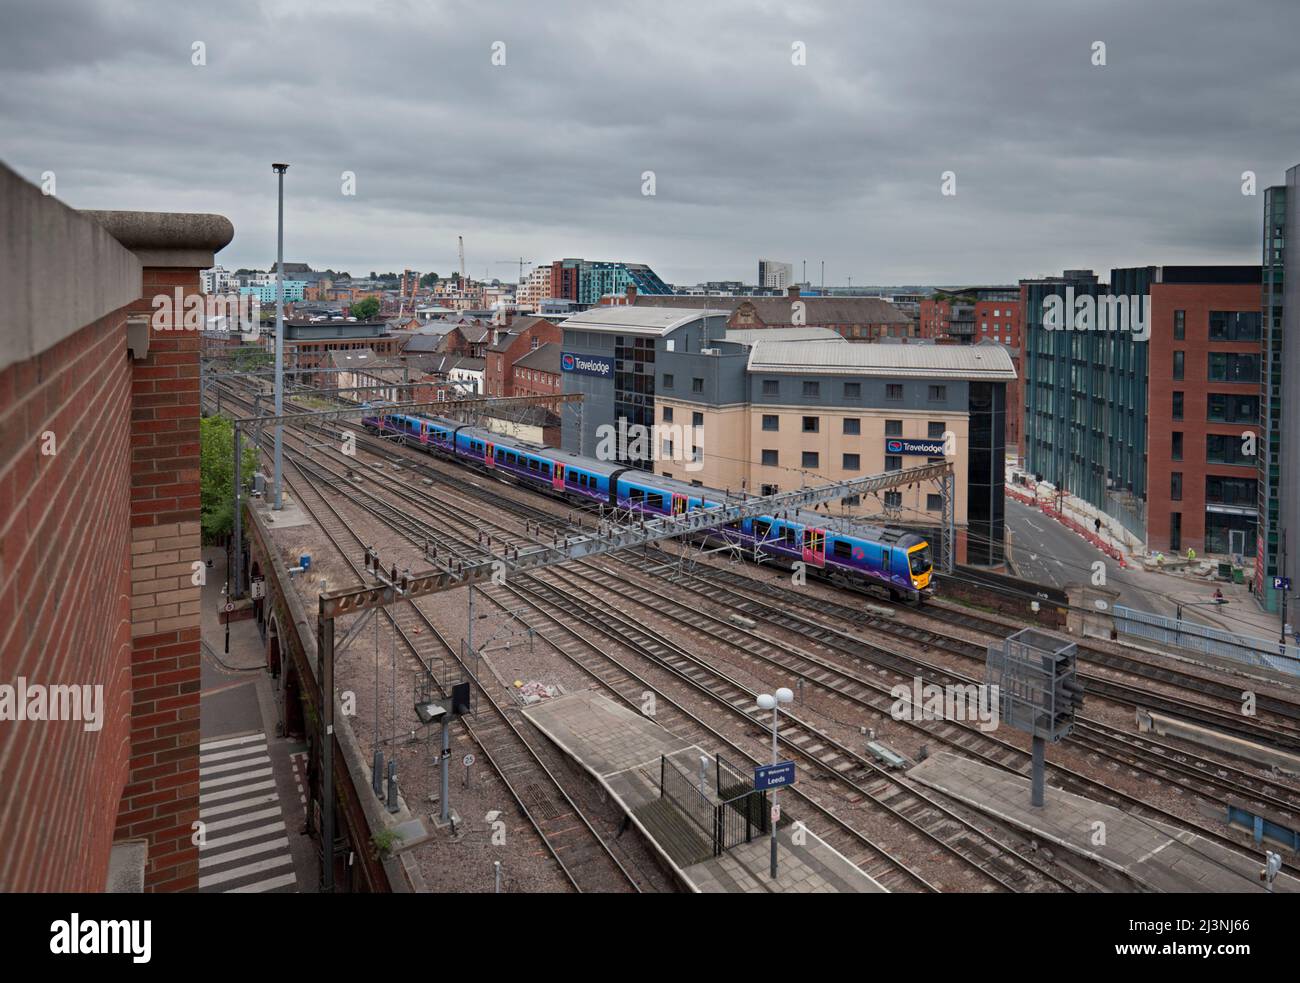 First Transpennine Express class 185  train running through the urban landscape in Leeds city centre Stock Photo